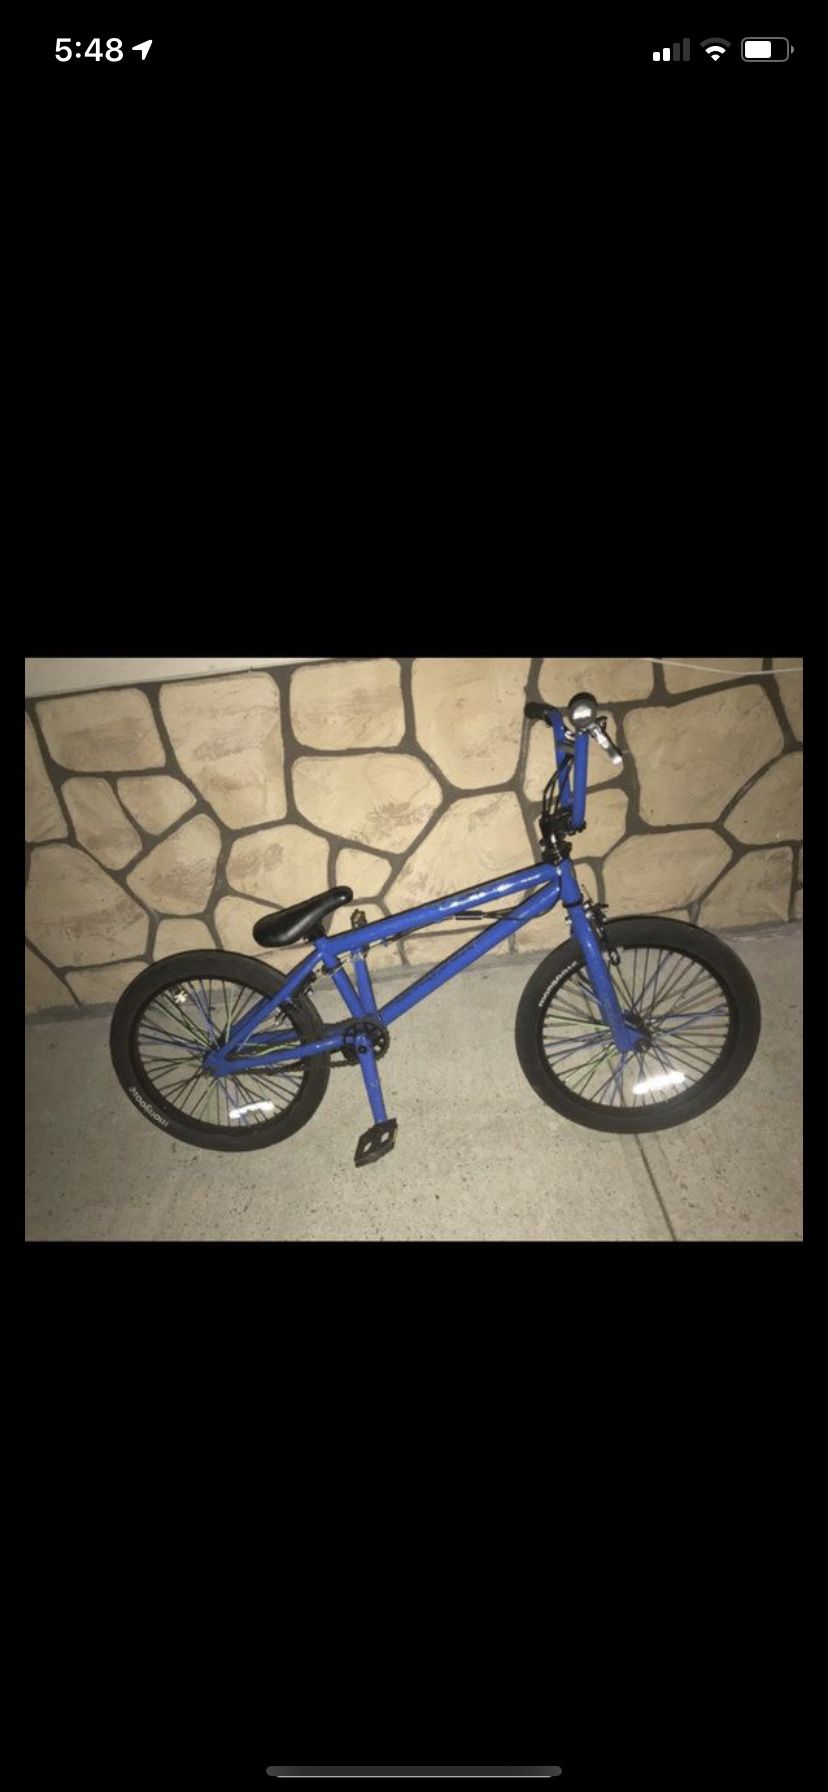 Blue mongoose bmx bike